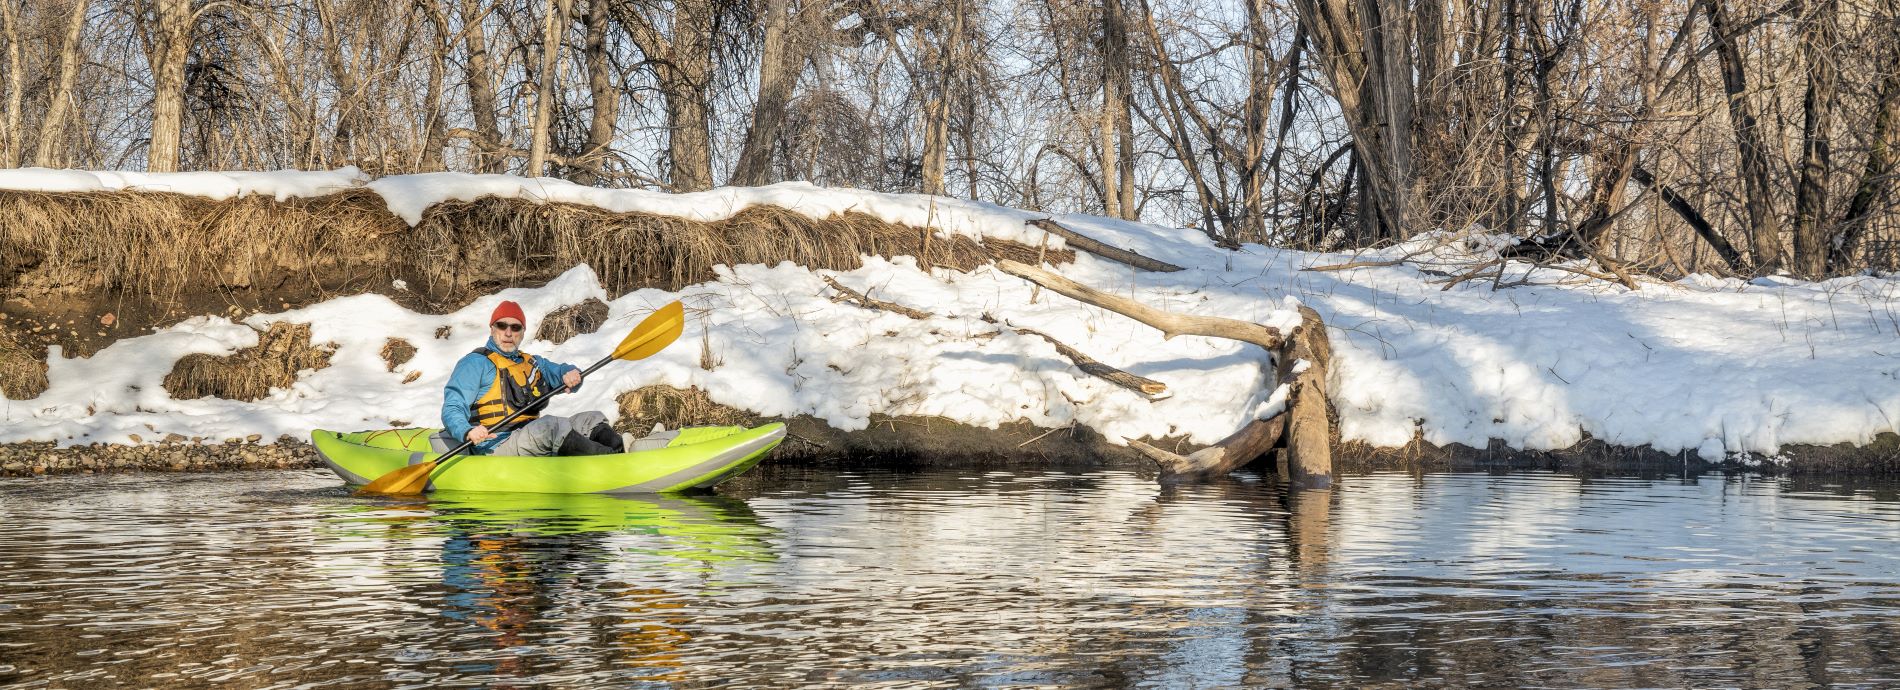 man paddling a kayak in a river during winter